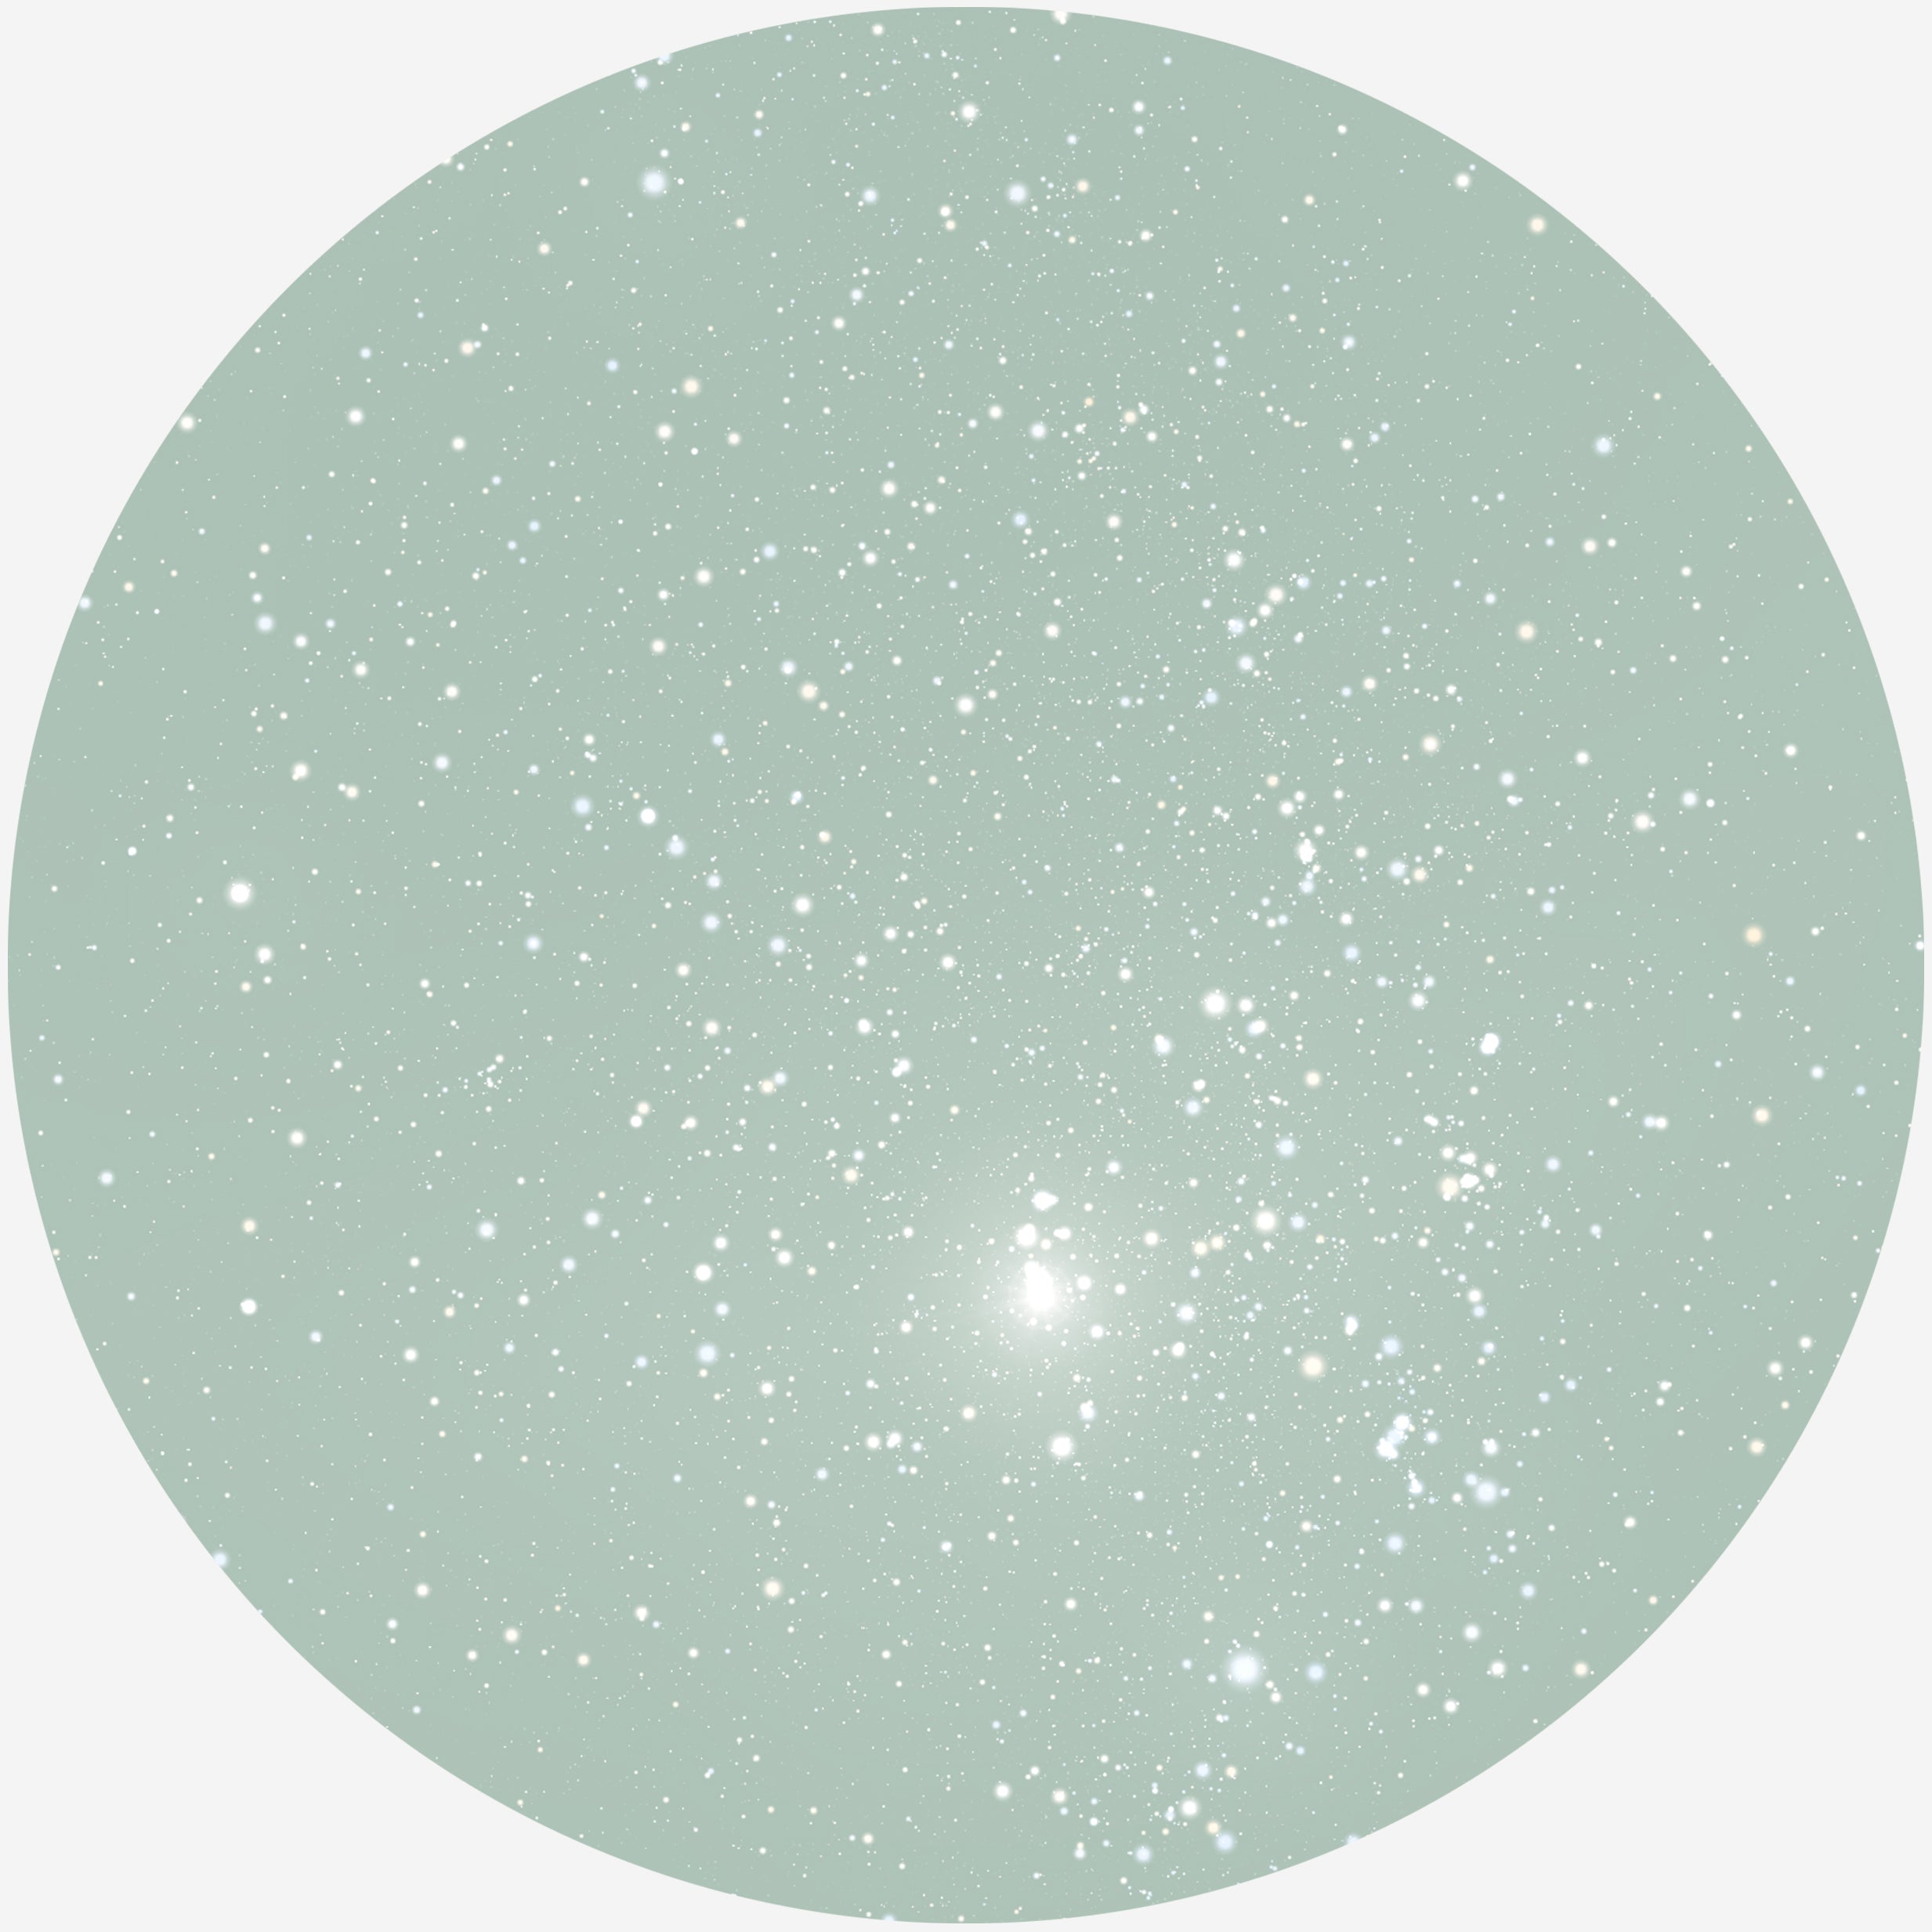 Se RUND PLAKAT MED PERSONLIG STJERNEHIMMEL (LYSEGRØN) - 20 cm / Klar stjernehimmel hos KISPUS